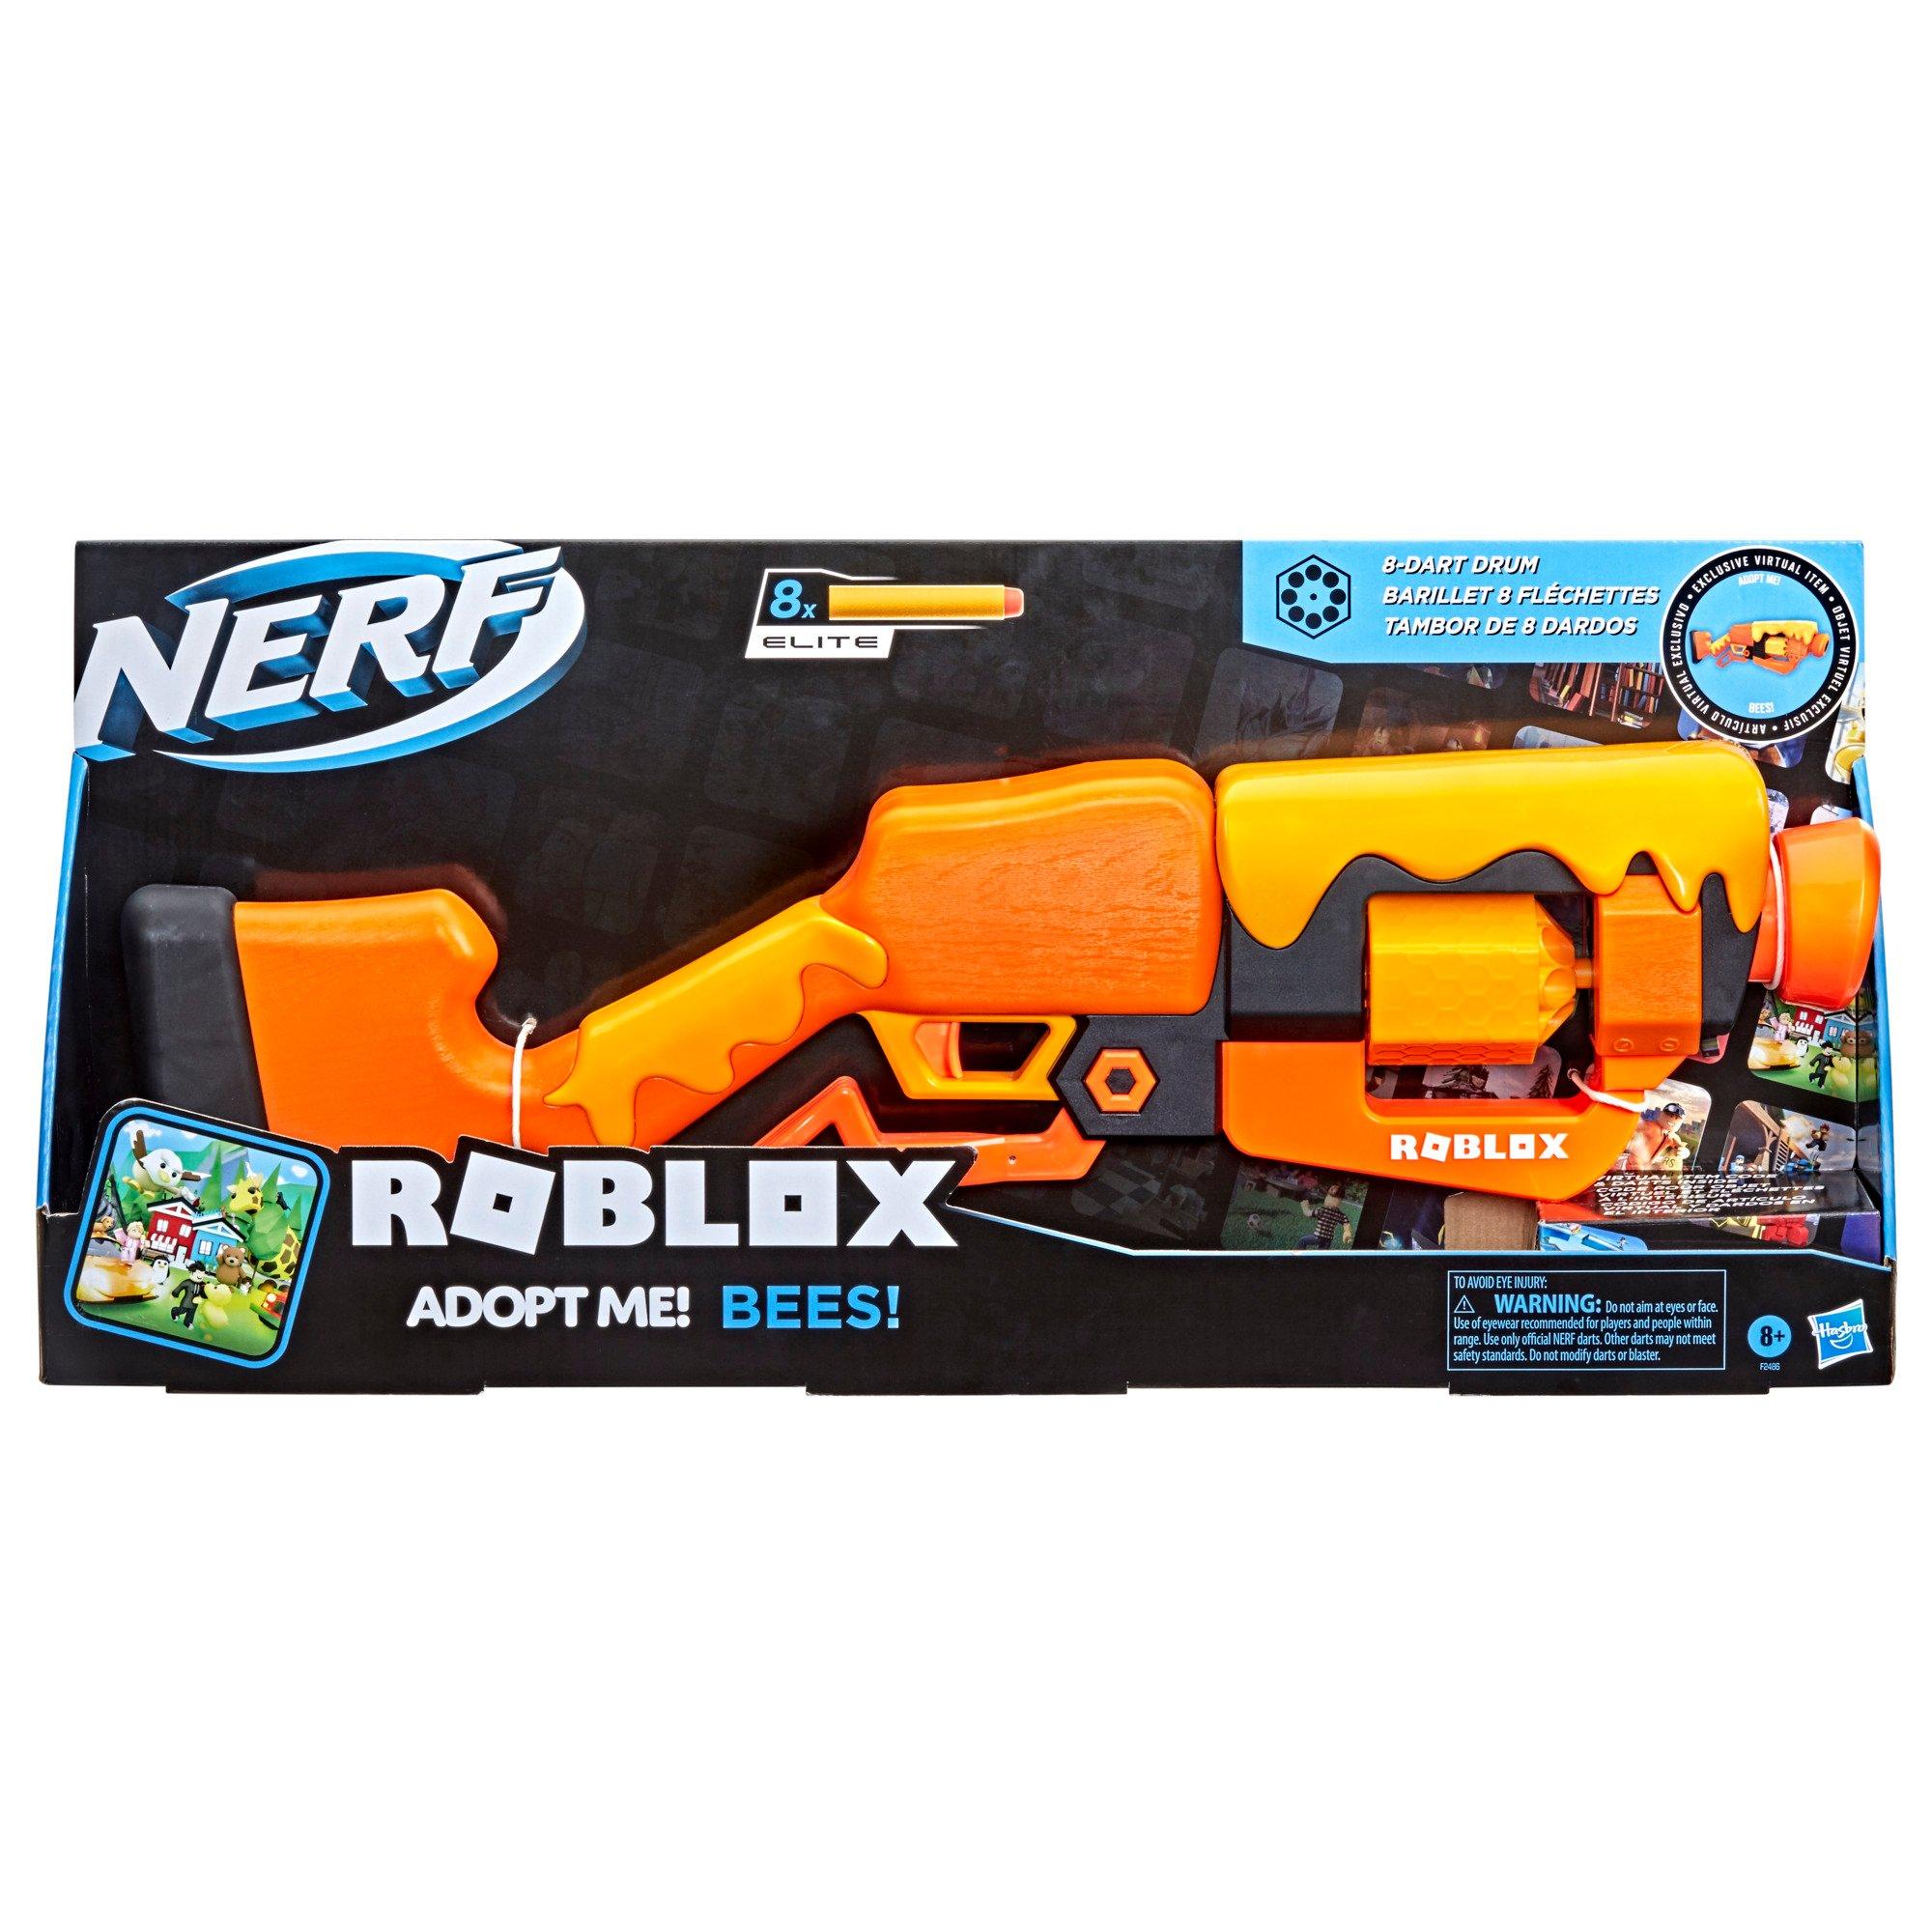 Nerf Roblox Adopt Me!: Bees! Blaster